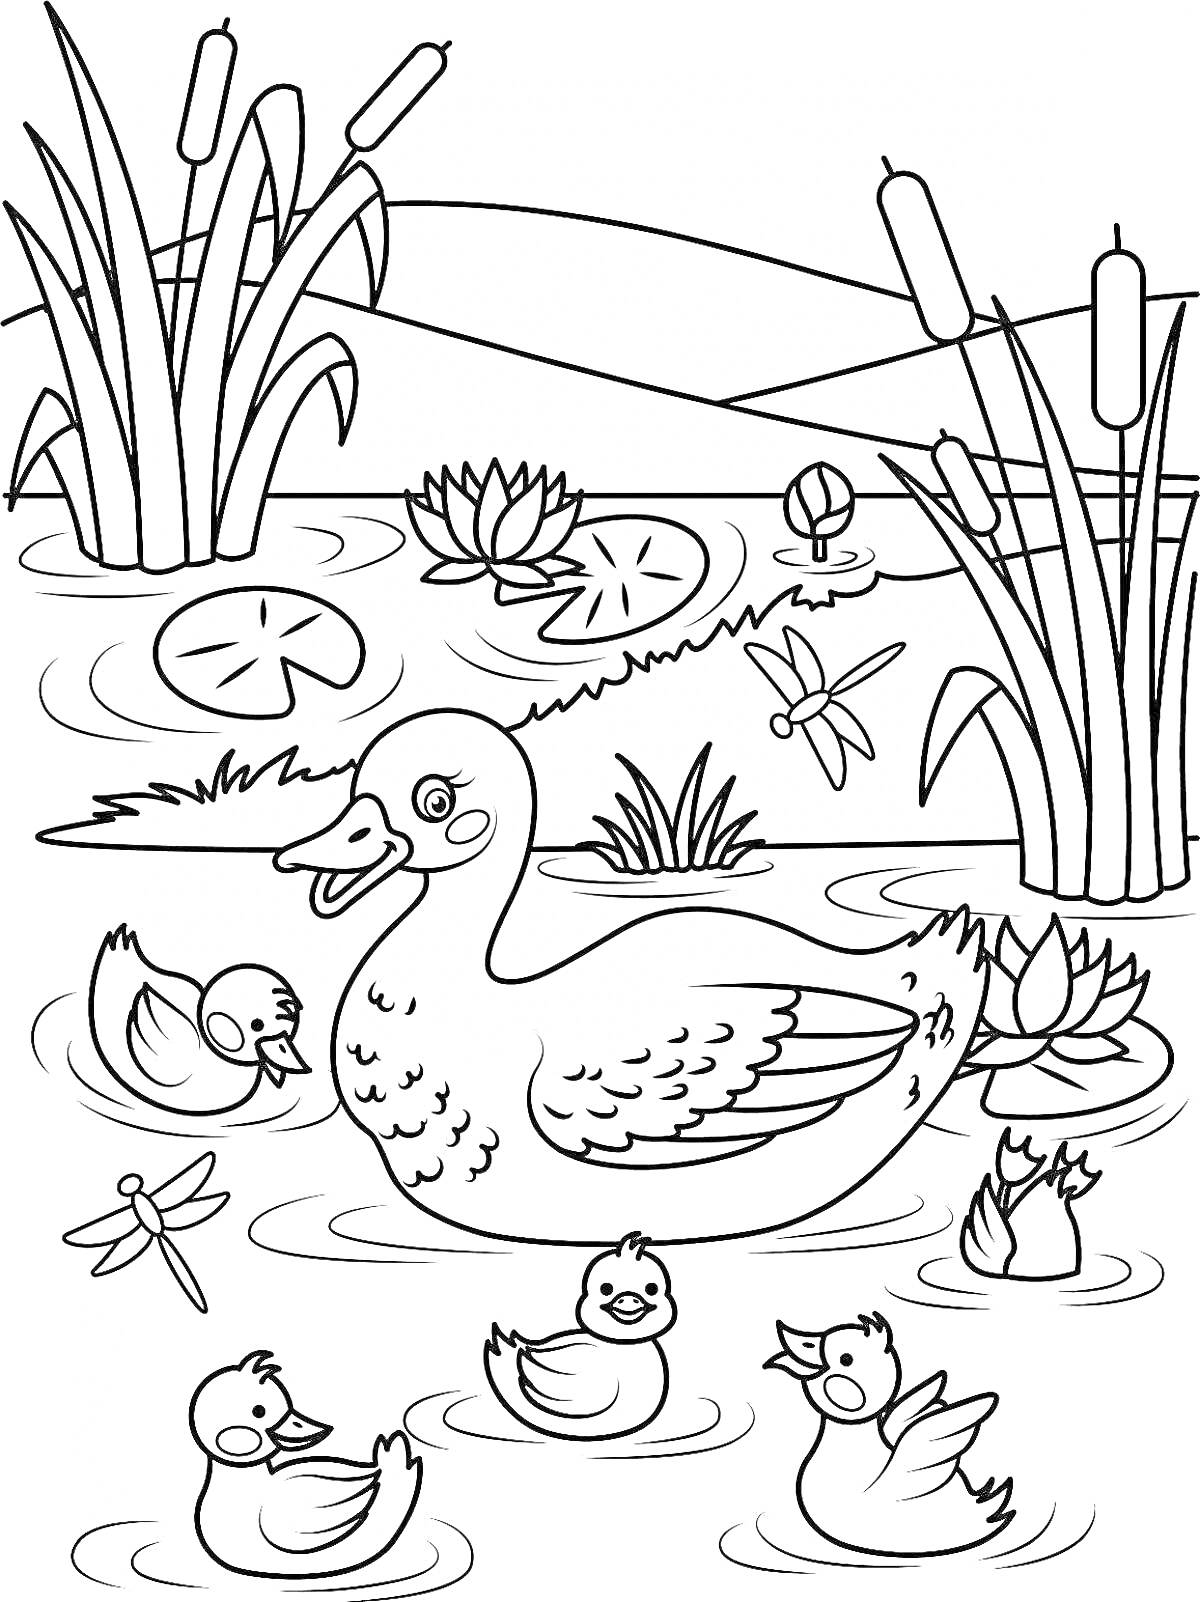 Раскраска Утка с утятами в пруду с лилиями, камышами и стрекозами